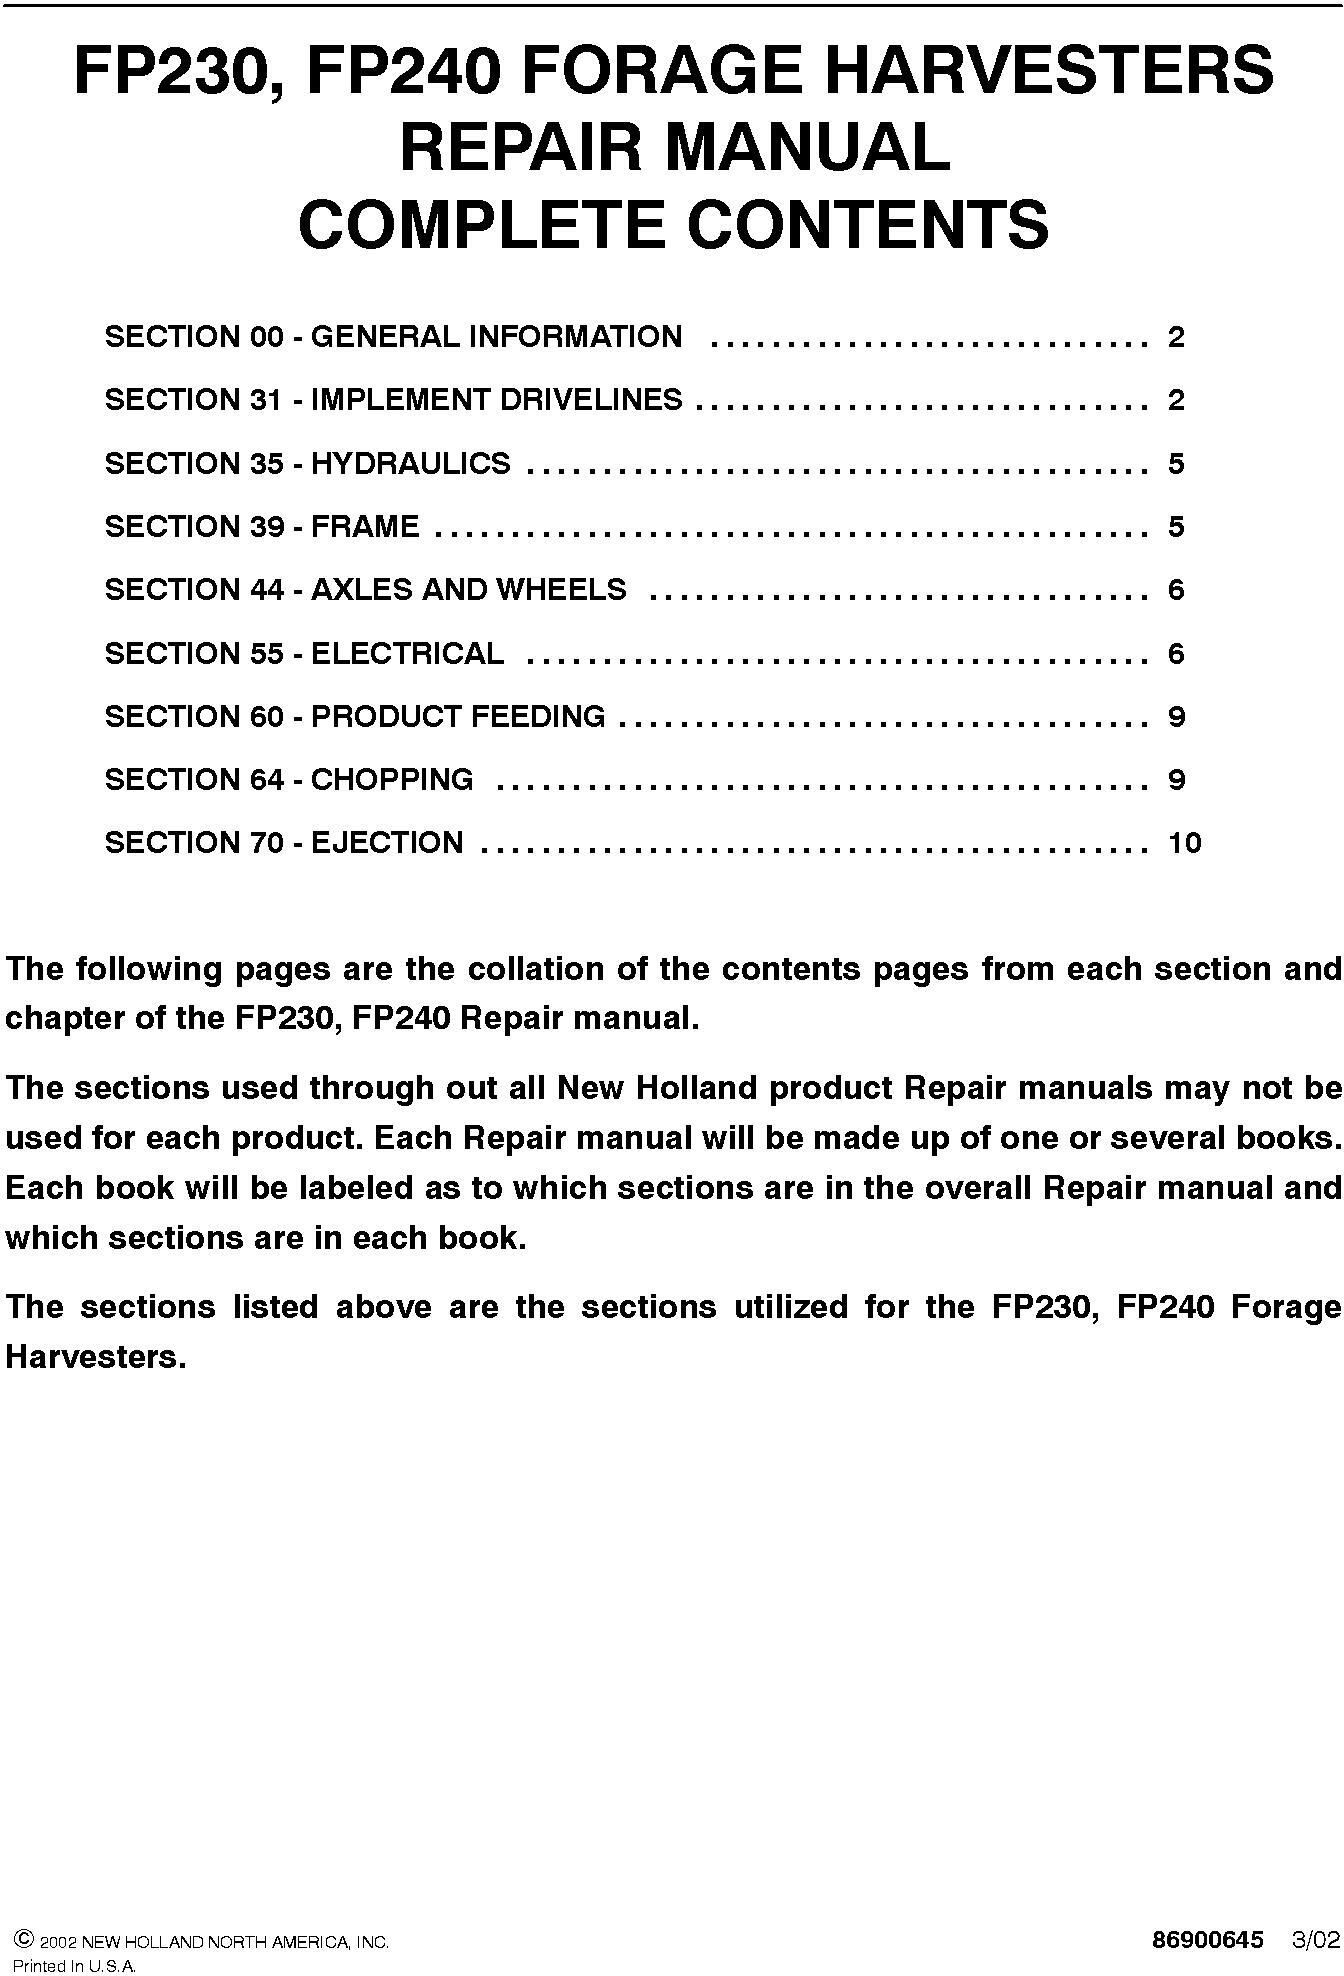 New Holland FP230, FP240 Forage Harvester Service Manual - 20024